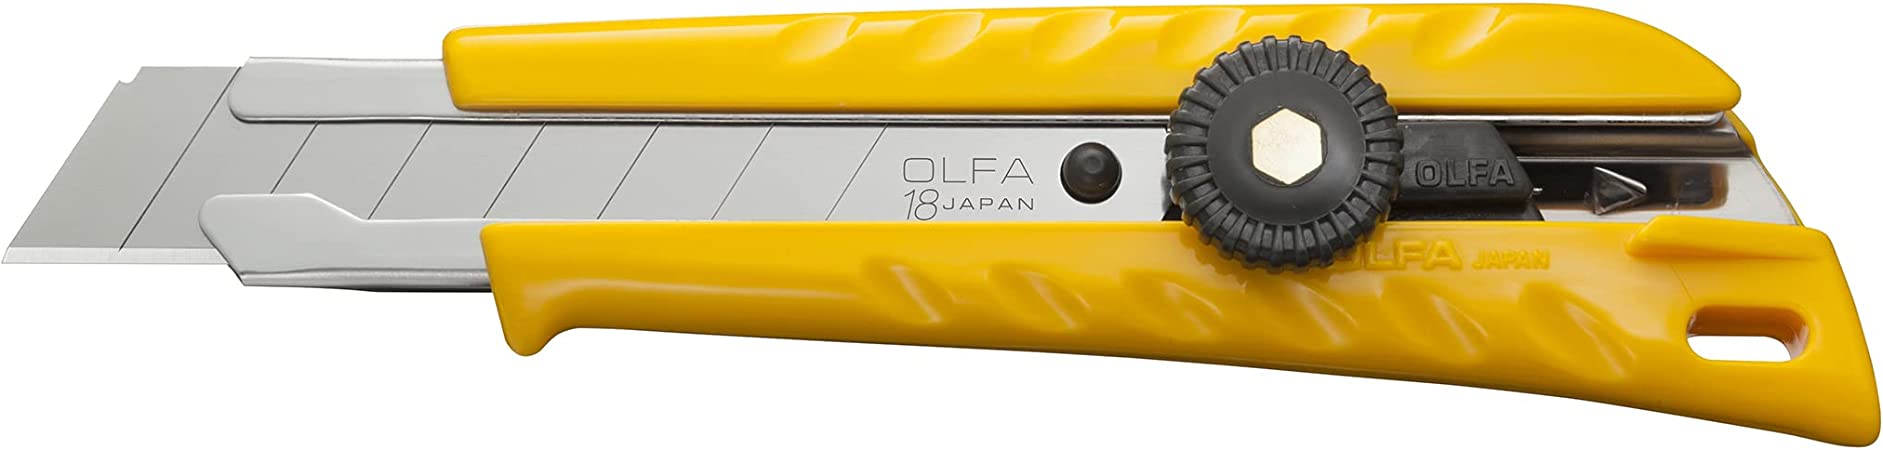 OLFA 5003 L-1 18mm Ratchet-Lock Heavy-Duty Utility Knife